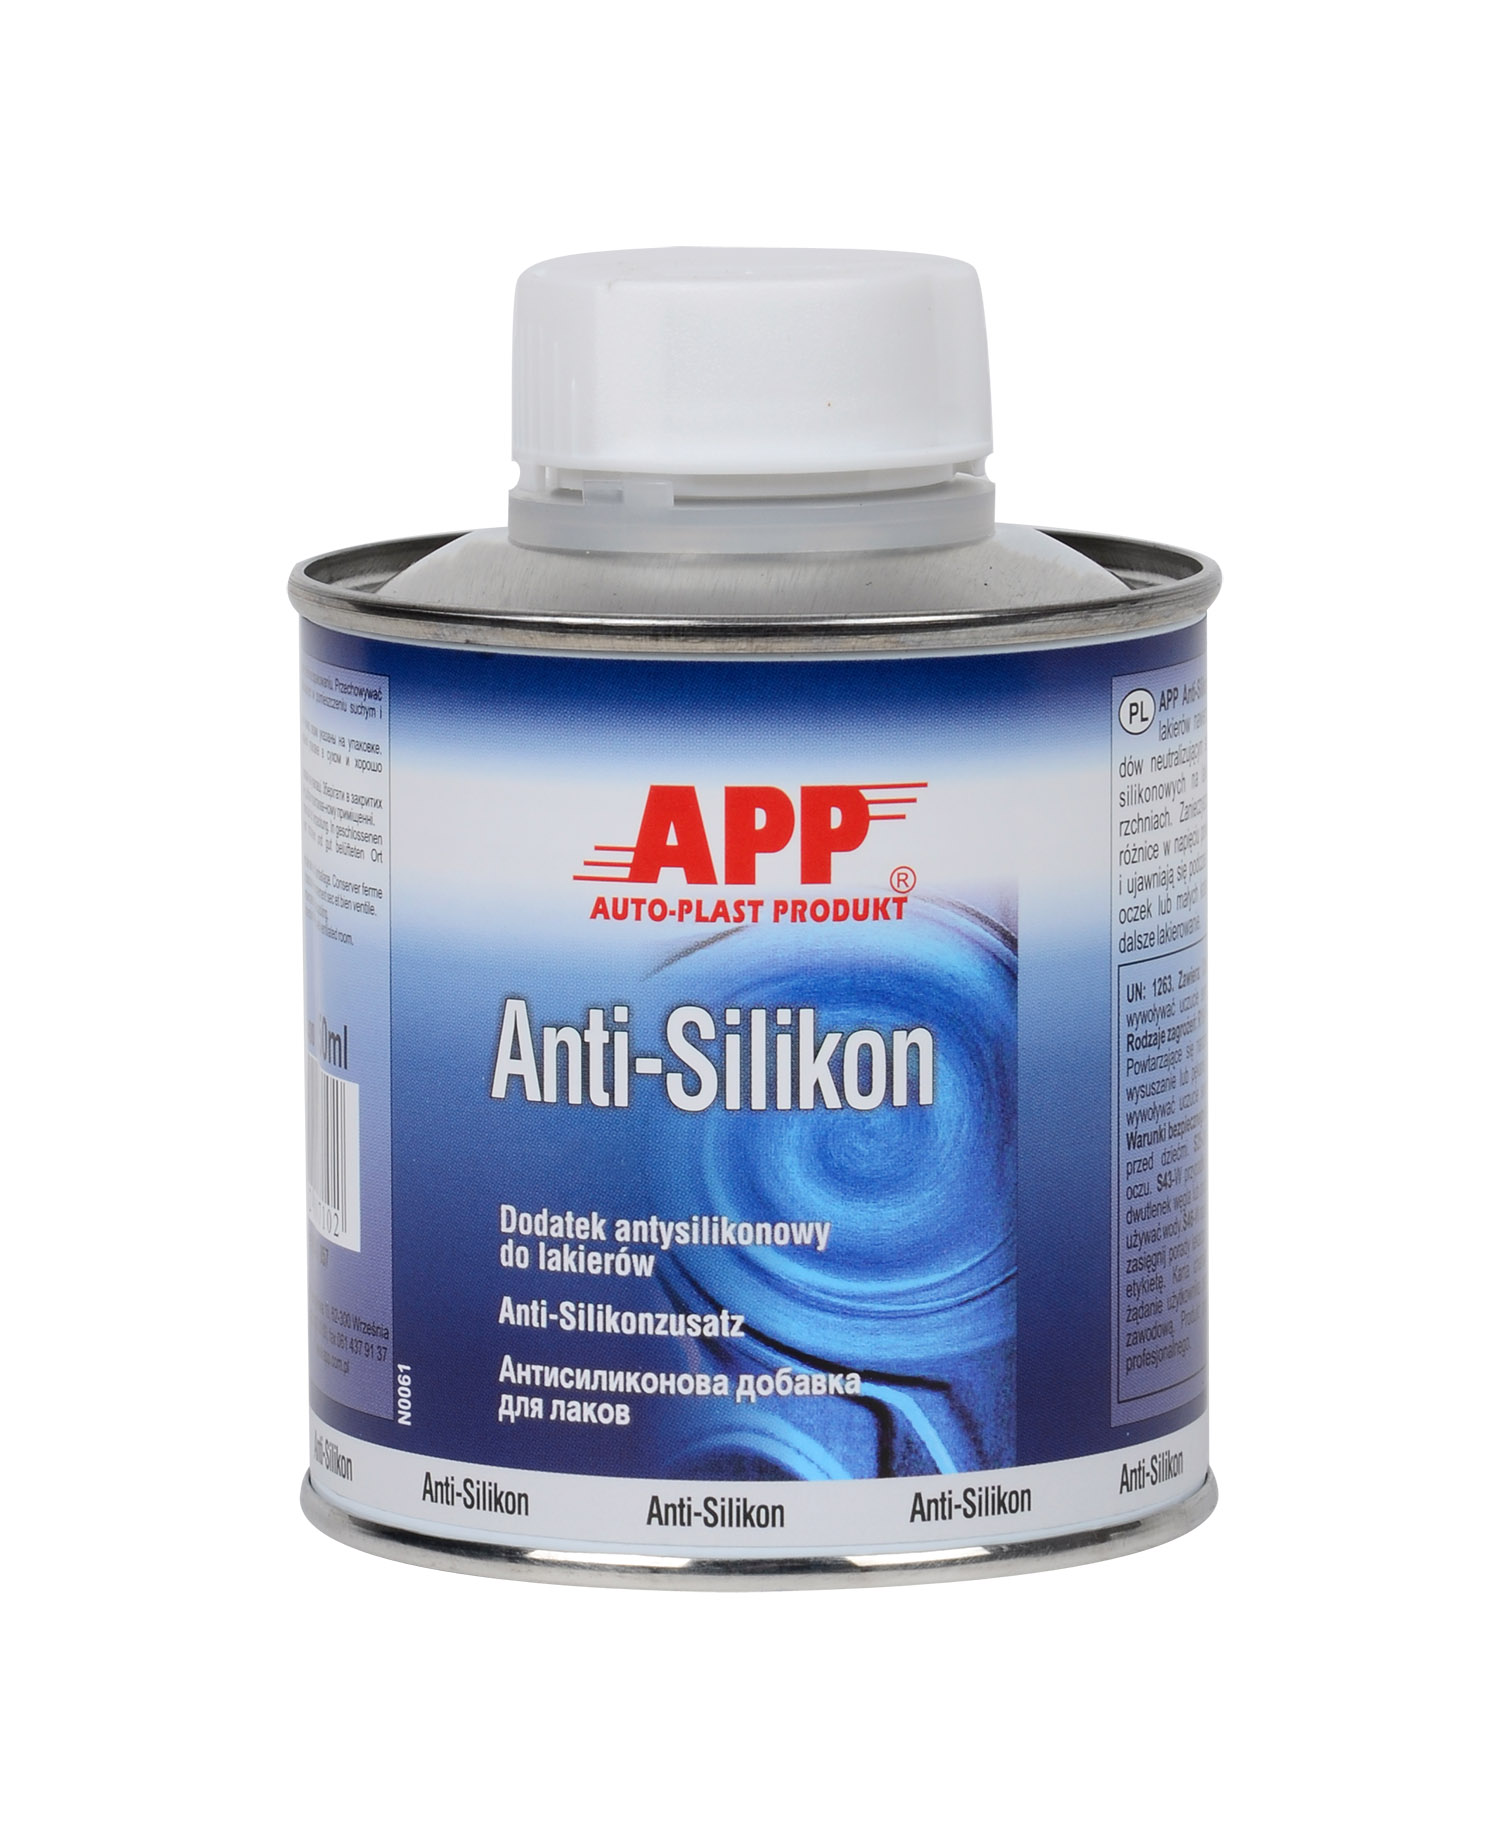 APP 030400 Anti Silikon - Antisilikon Silikonstop Antisilikonzusatz 0,25 L | Lackierung Krater Autolack Silicon Lack